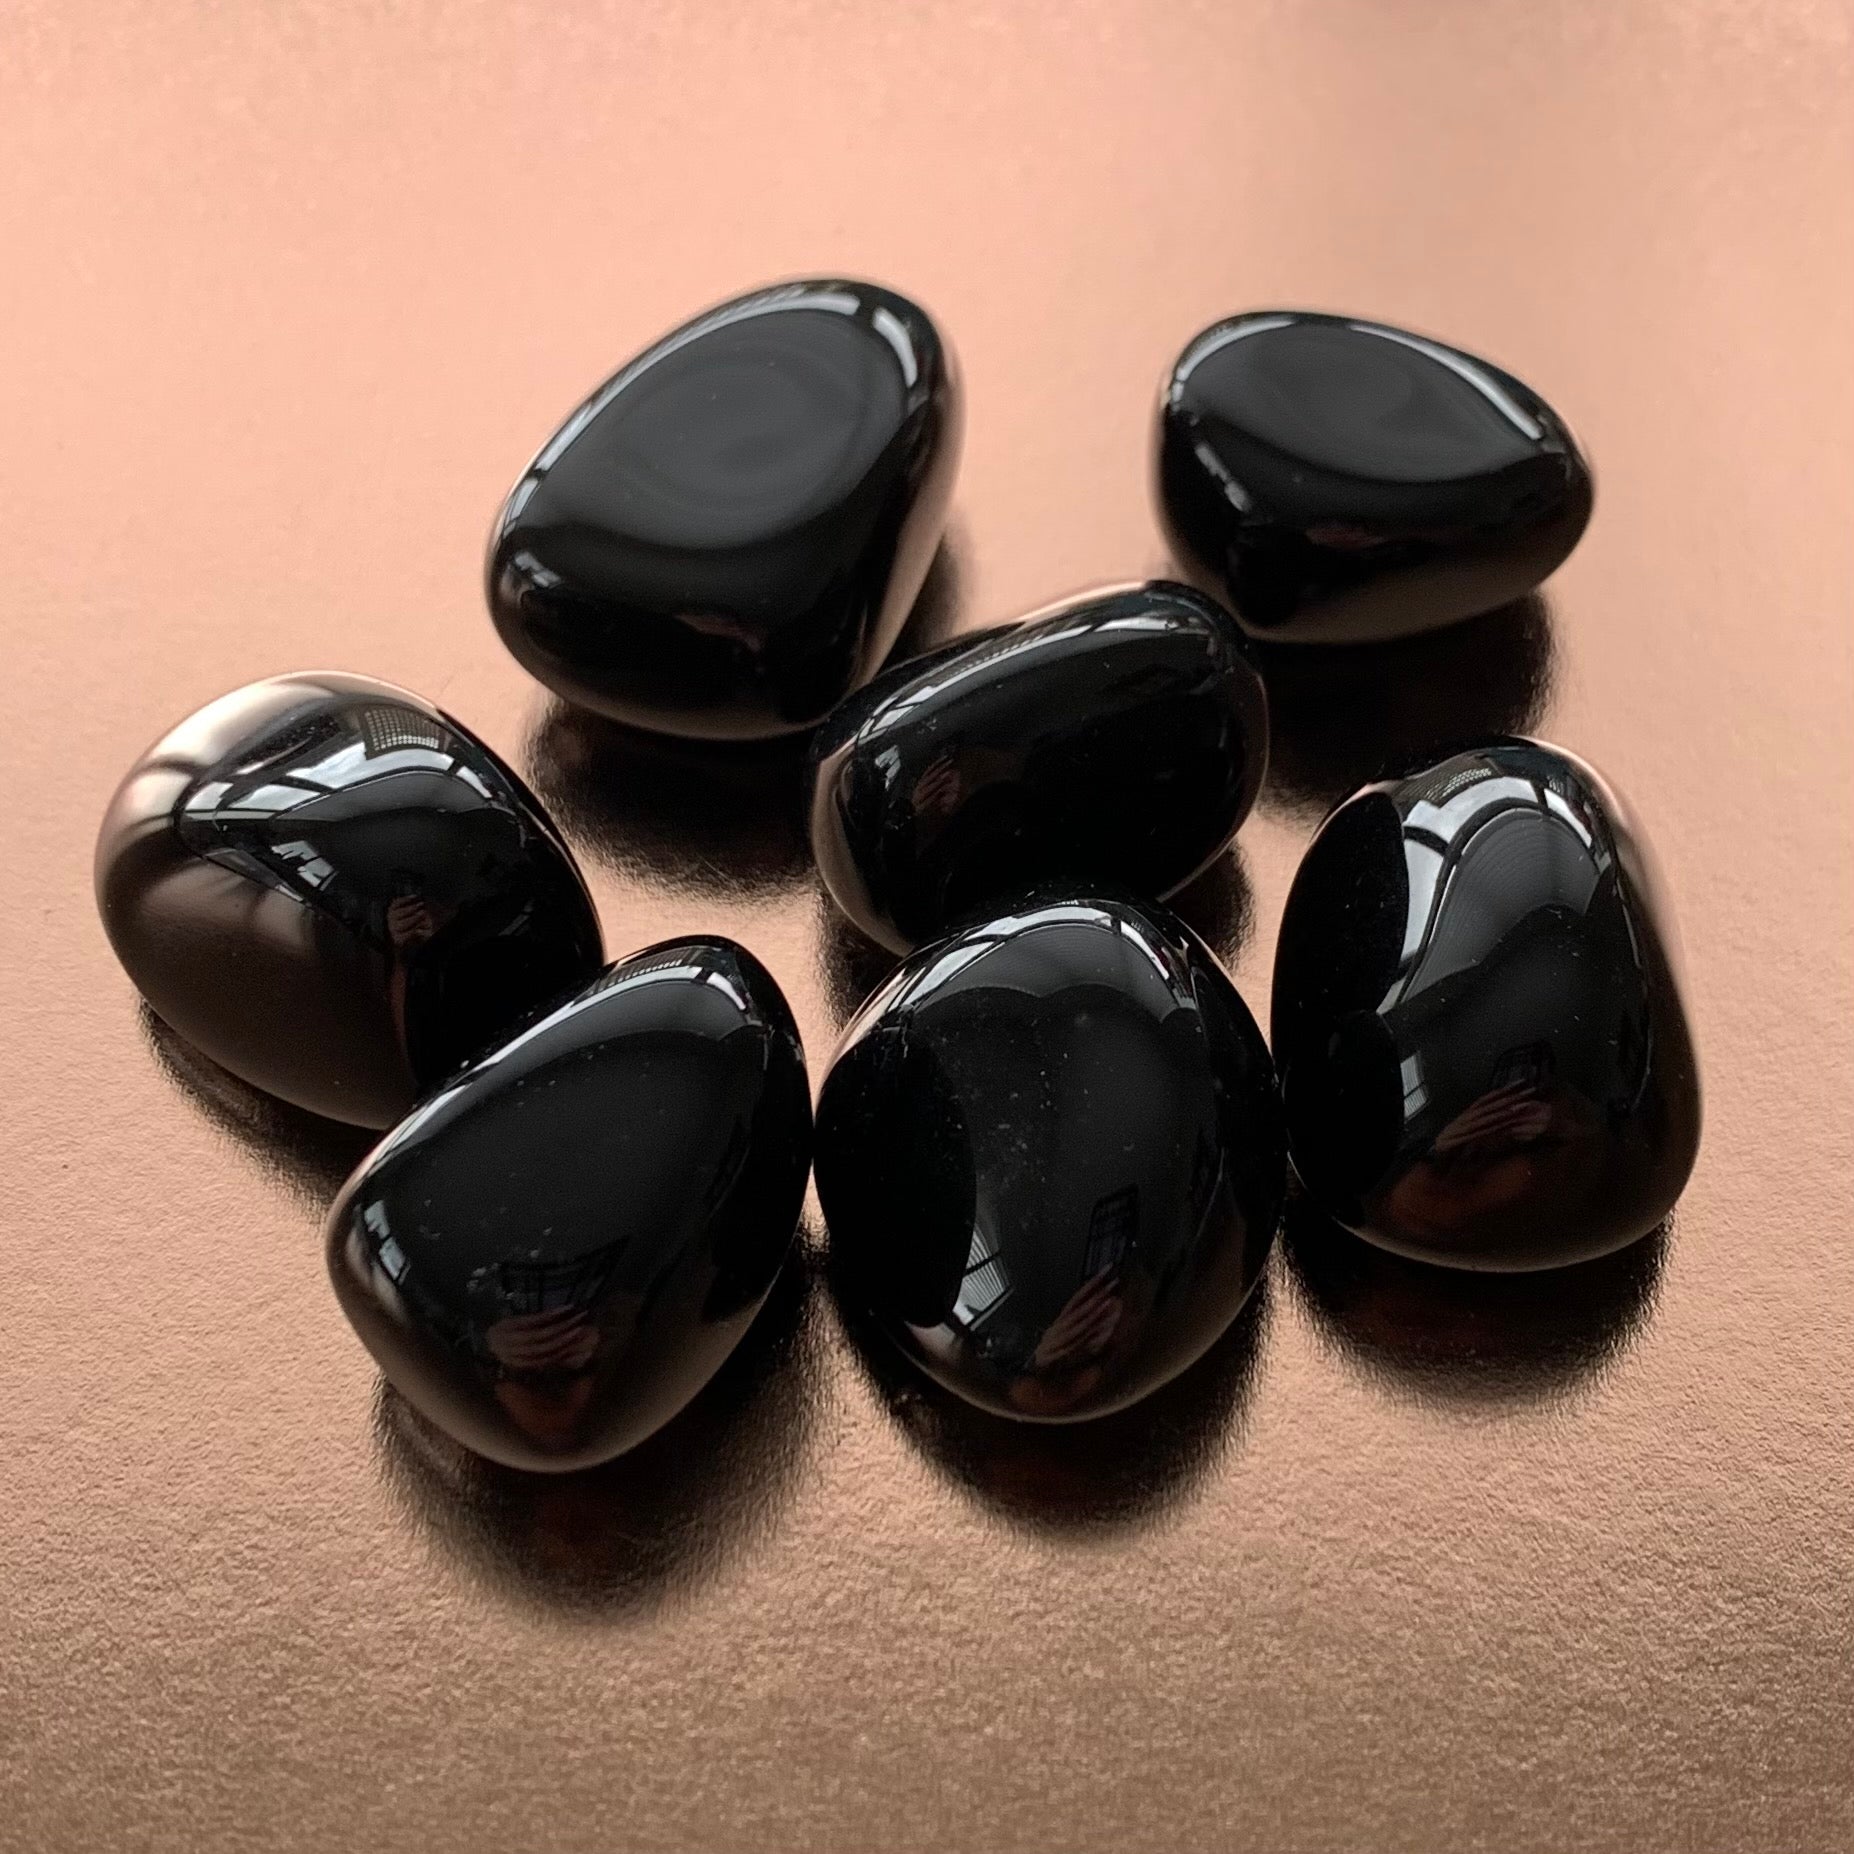 Black Obsidian Tumble - Conscious Crystals New Zealand Crystal and Spiritual Shop